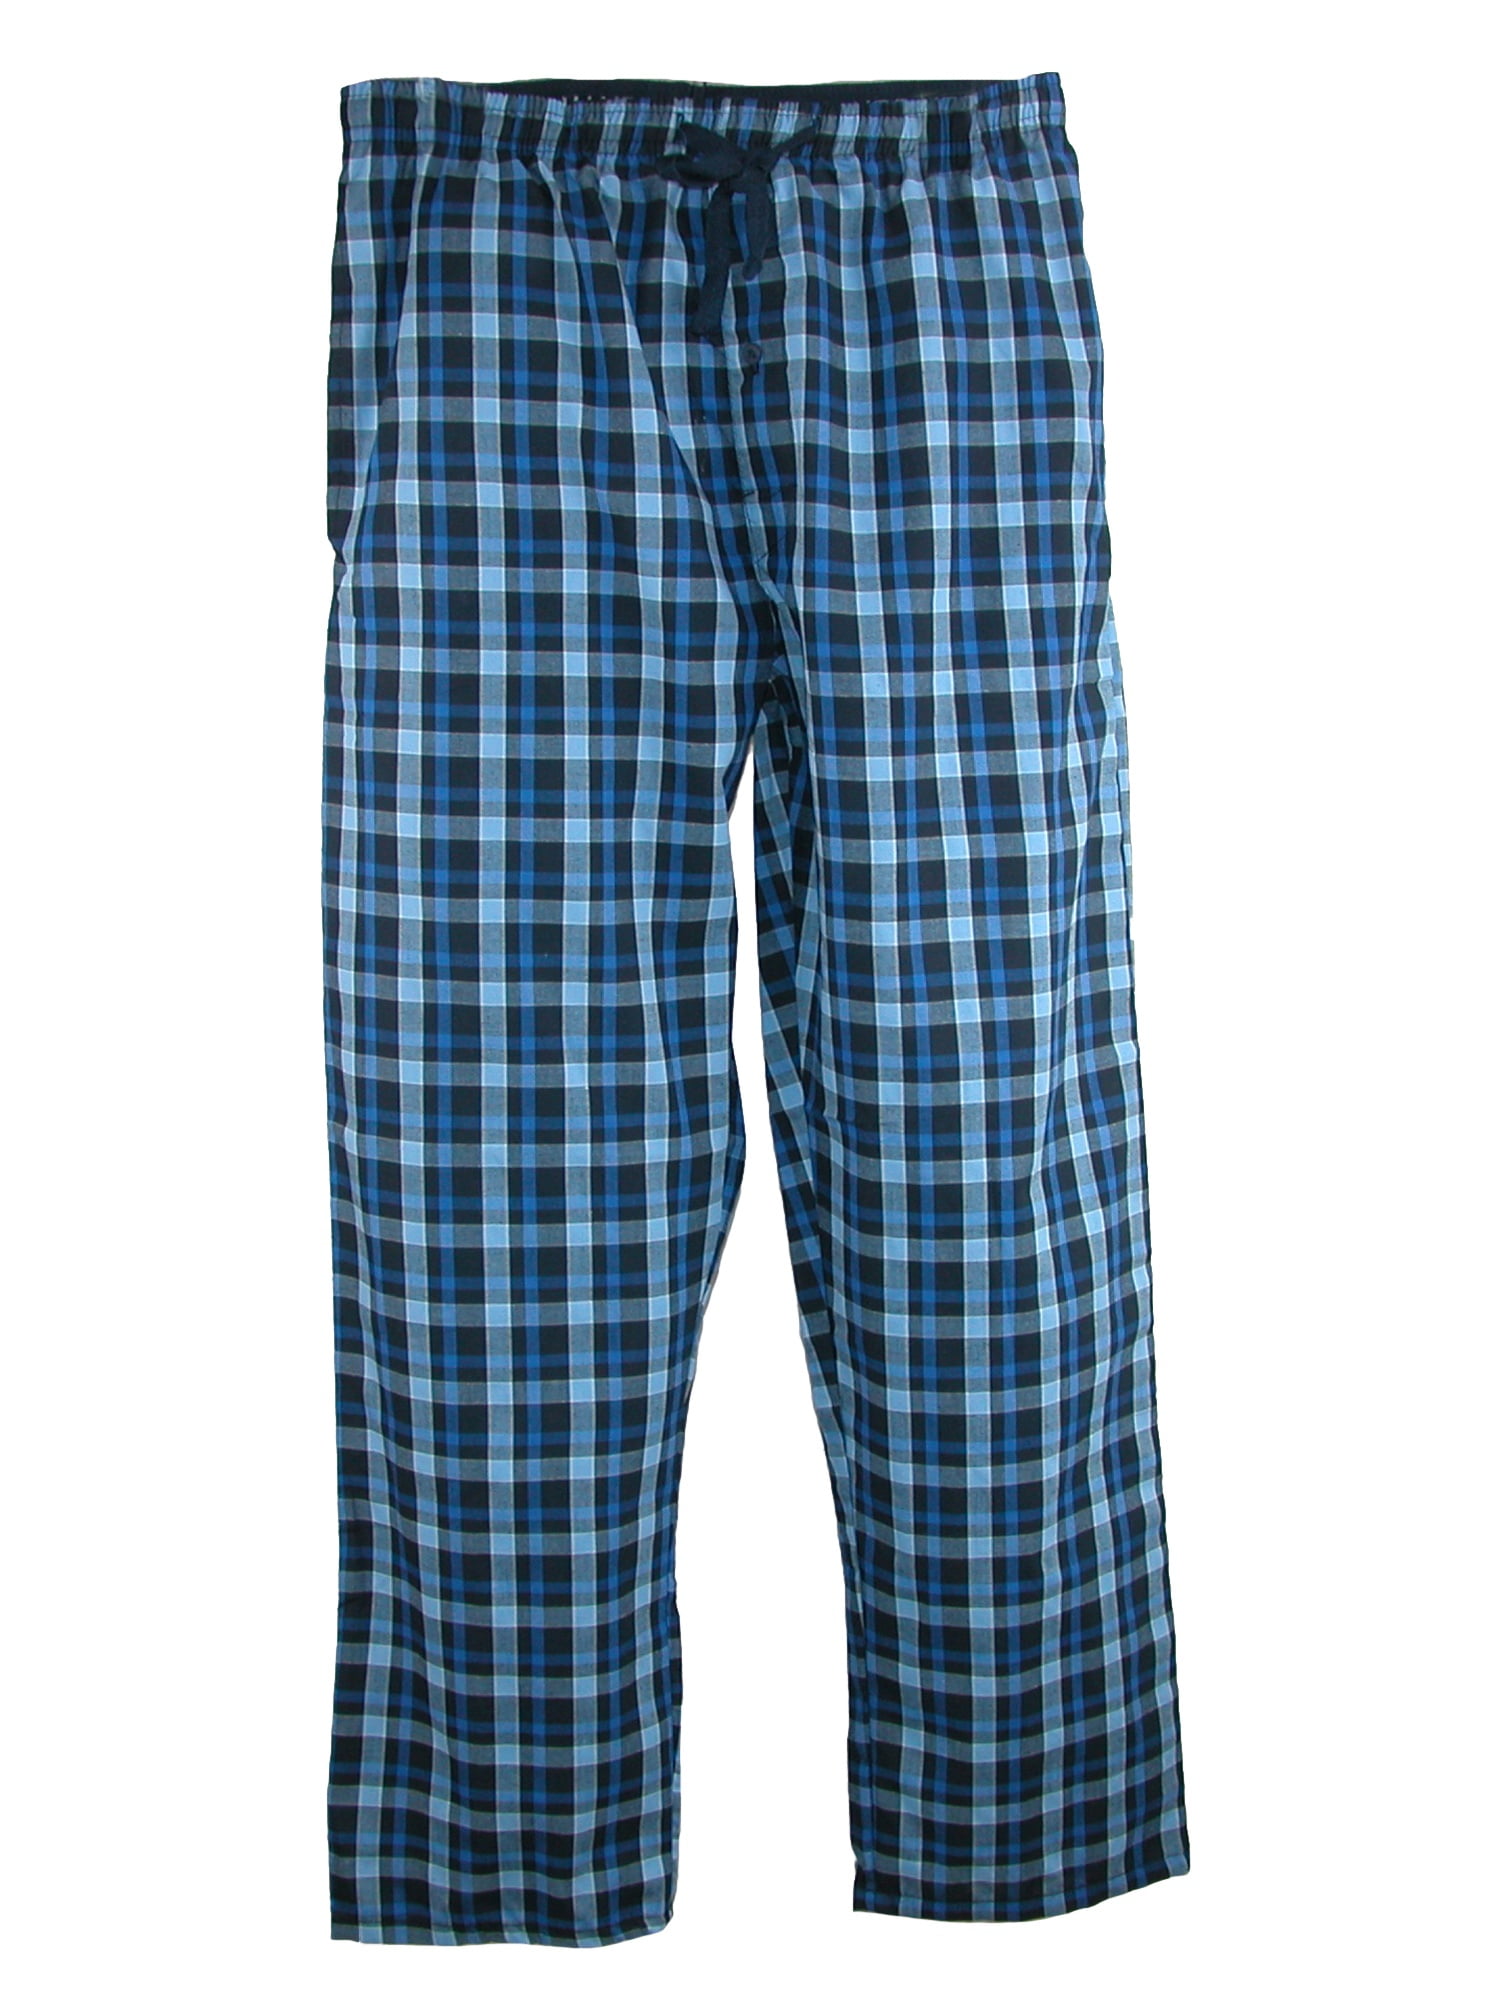 Hanes Men's Big & Tall Woven Drawstring Sleep Pajama Pants - Walmart.com